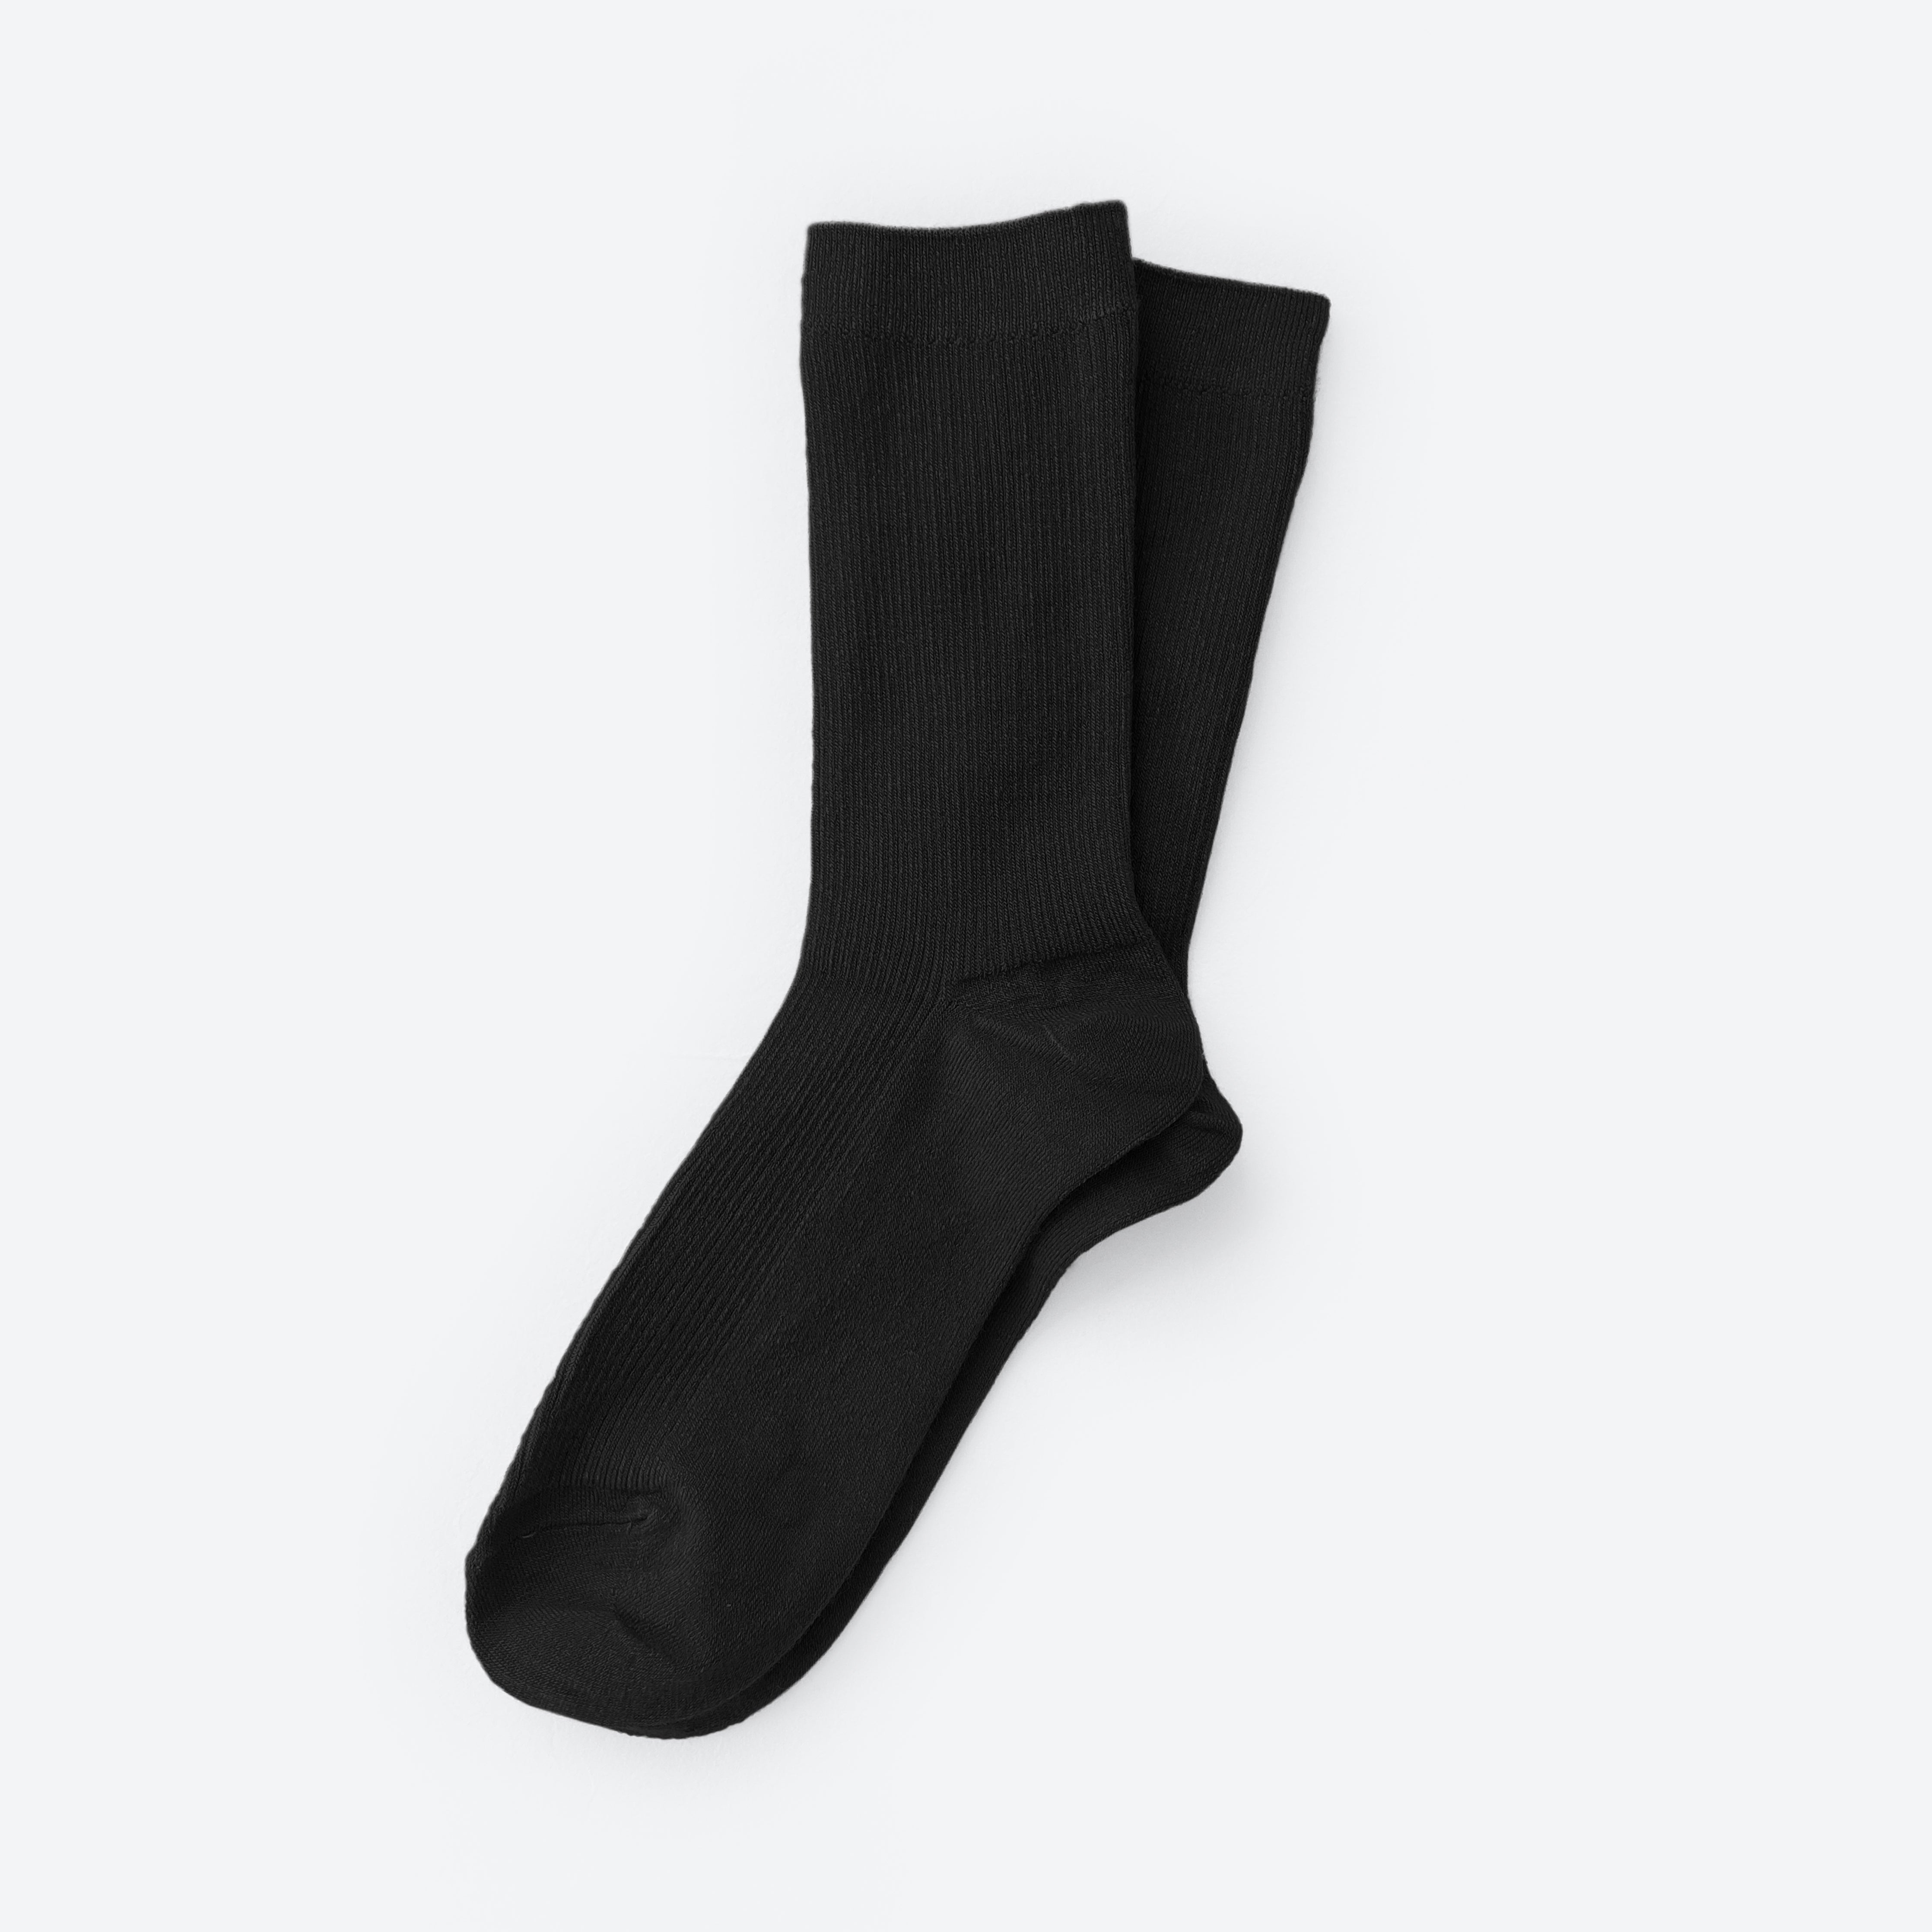 Hooray Sock Co. Raven Merino Wool Crew Socks. Everyday ease and flair in dark black. Crew length, 20% Merino Wool, 35% Spandex, 45% Acrylic. Size: Small (US women’s 4-10)